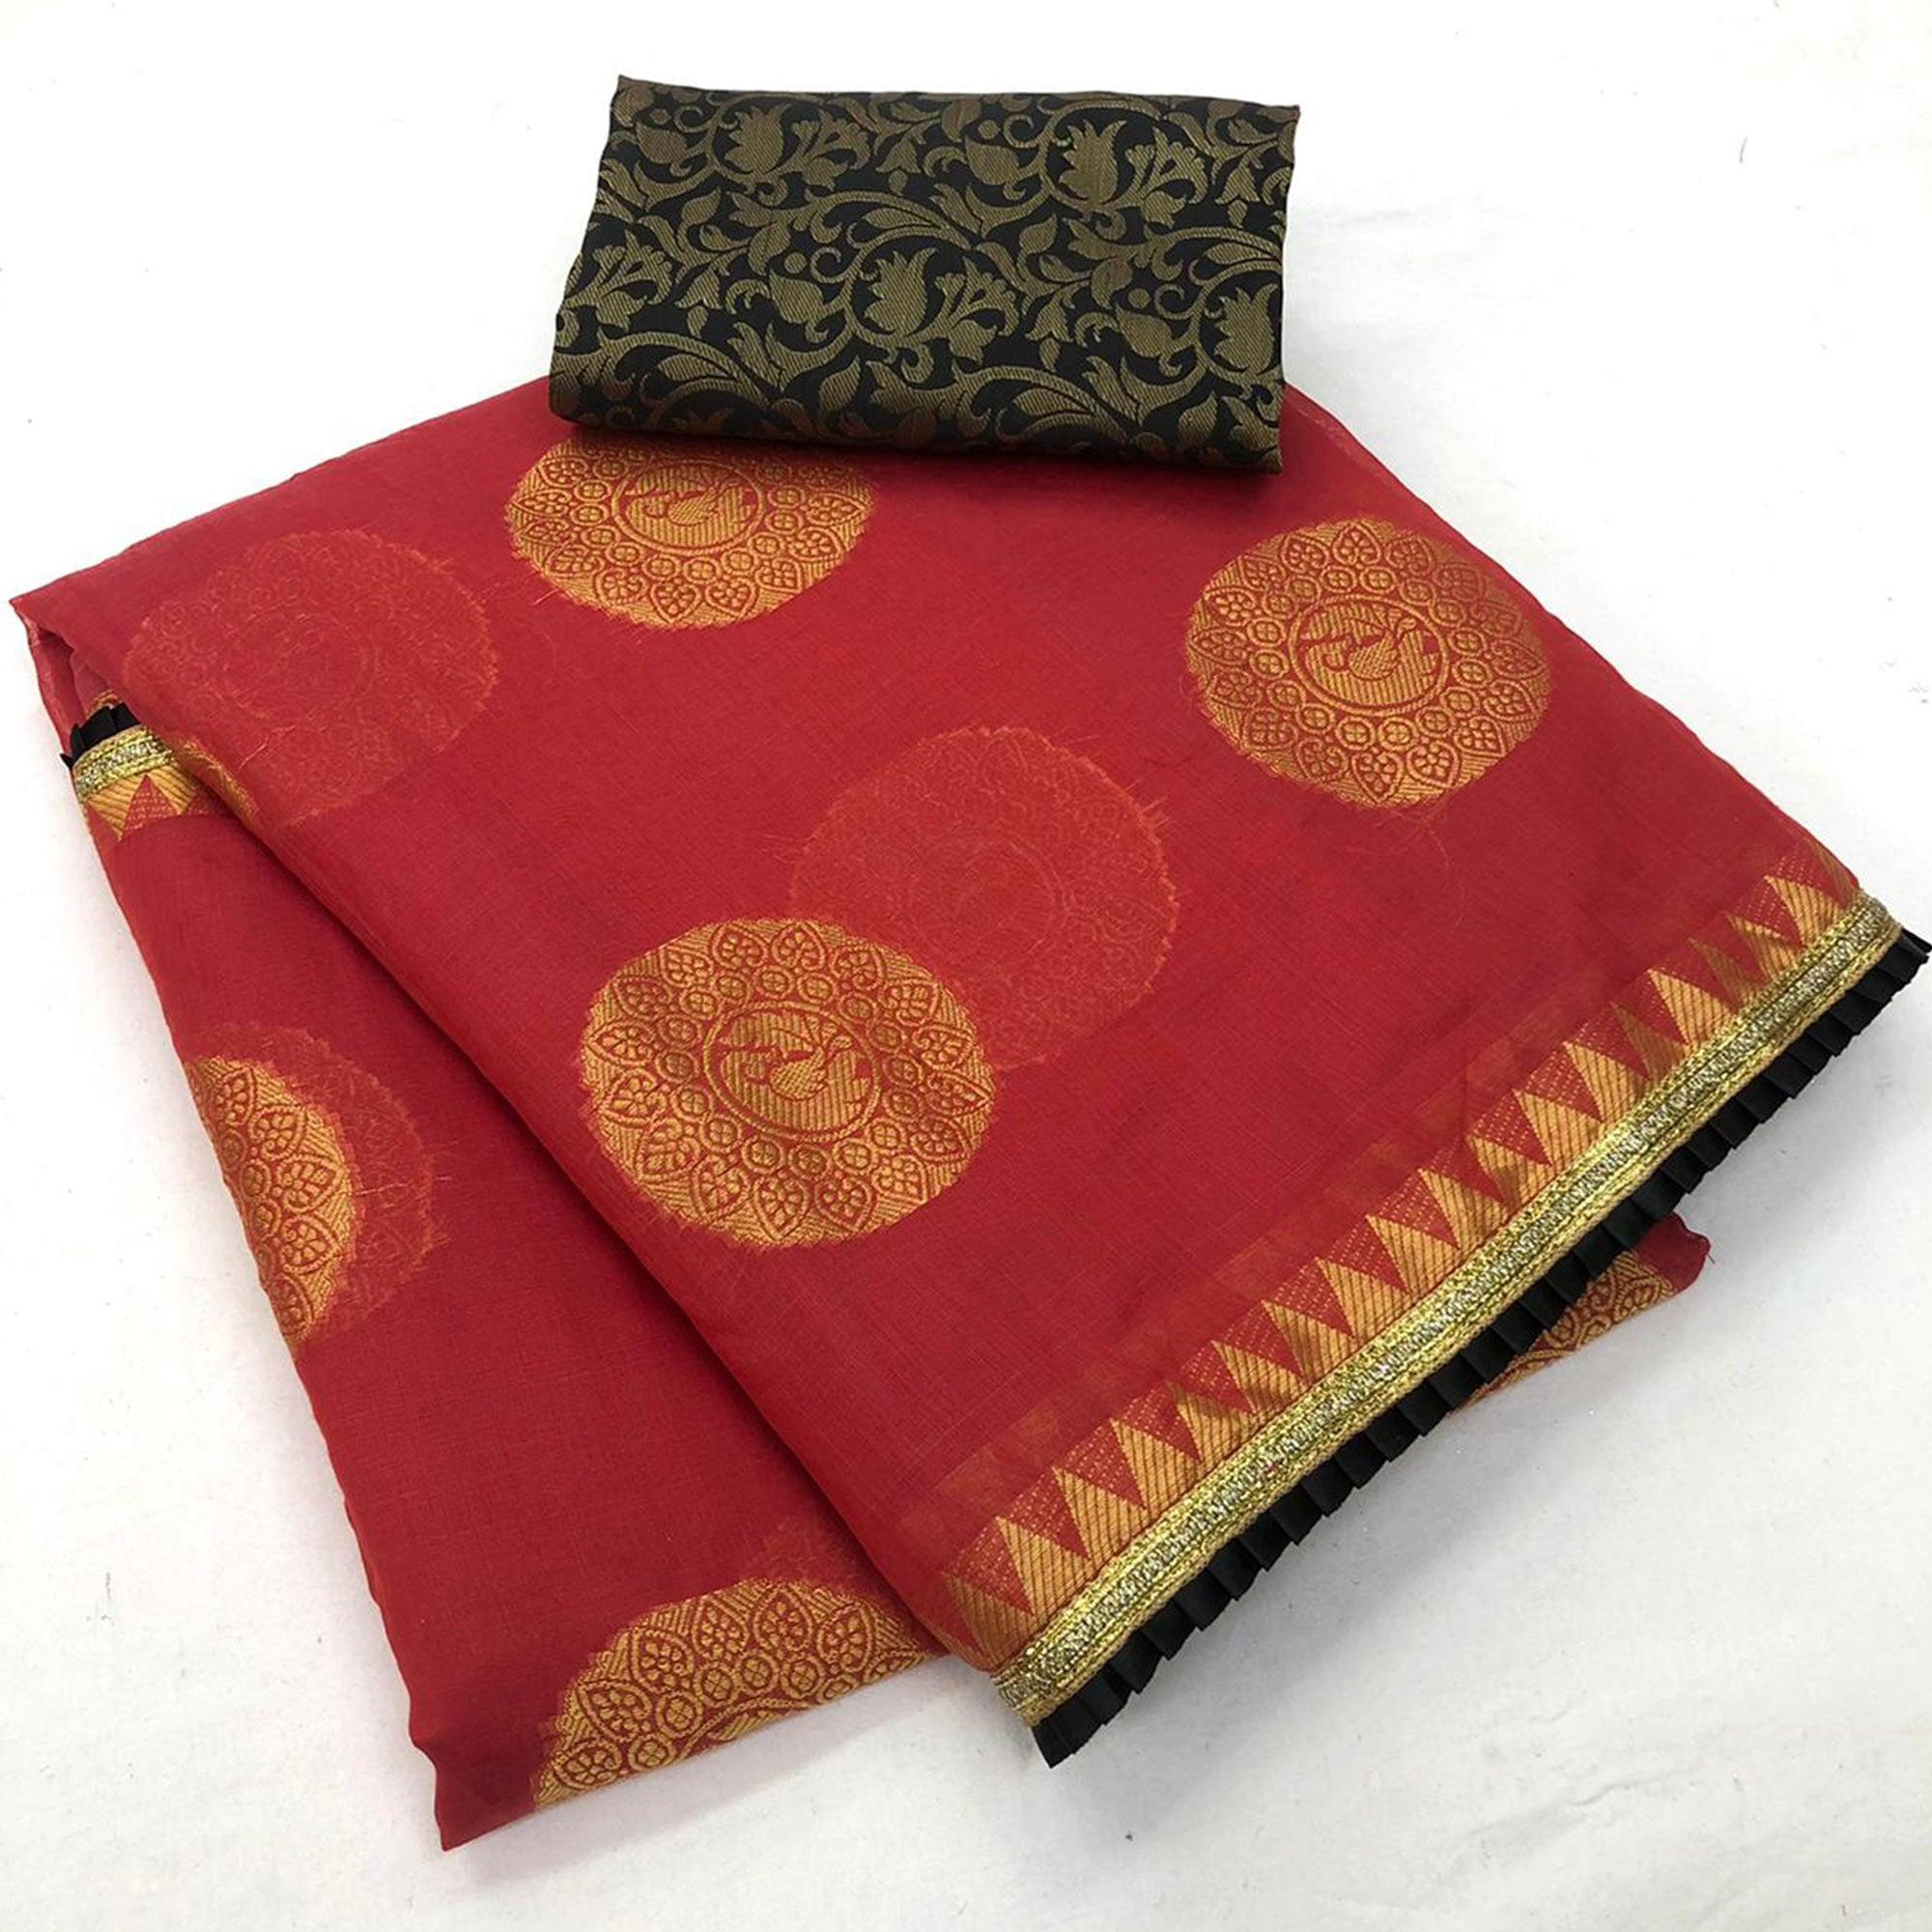 Charming Red Colored Festive Wear Woven Cotton Saree - Peachmode